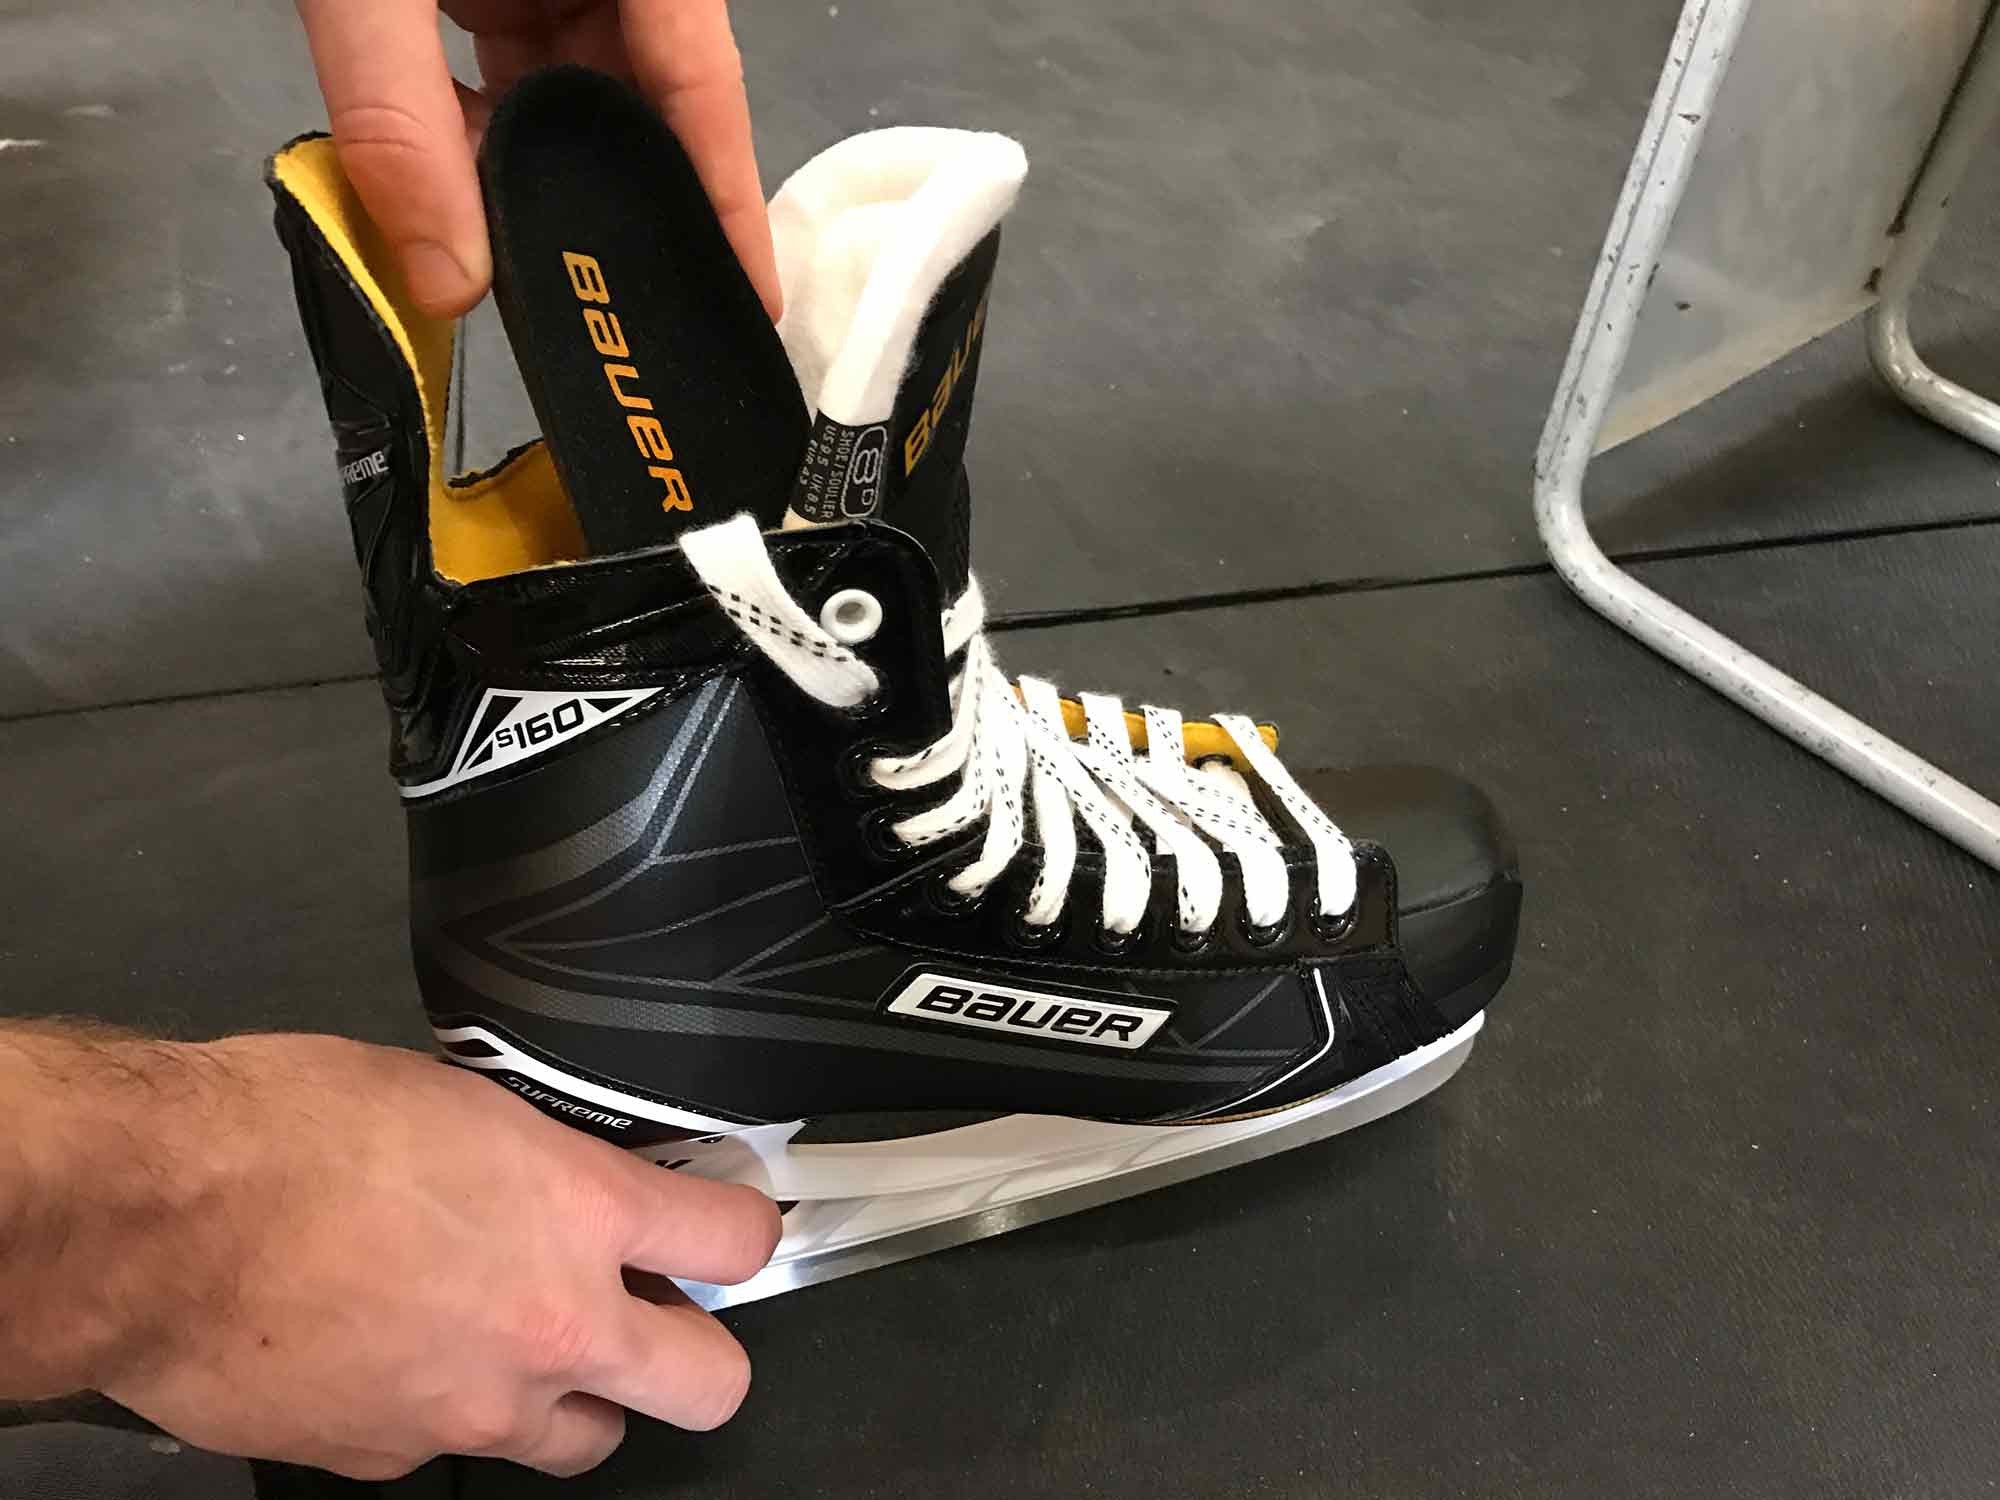 Quick Tip To Properly Size Hockey Skates